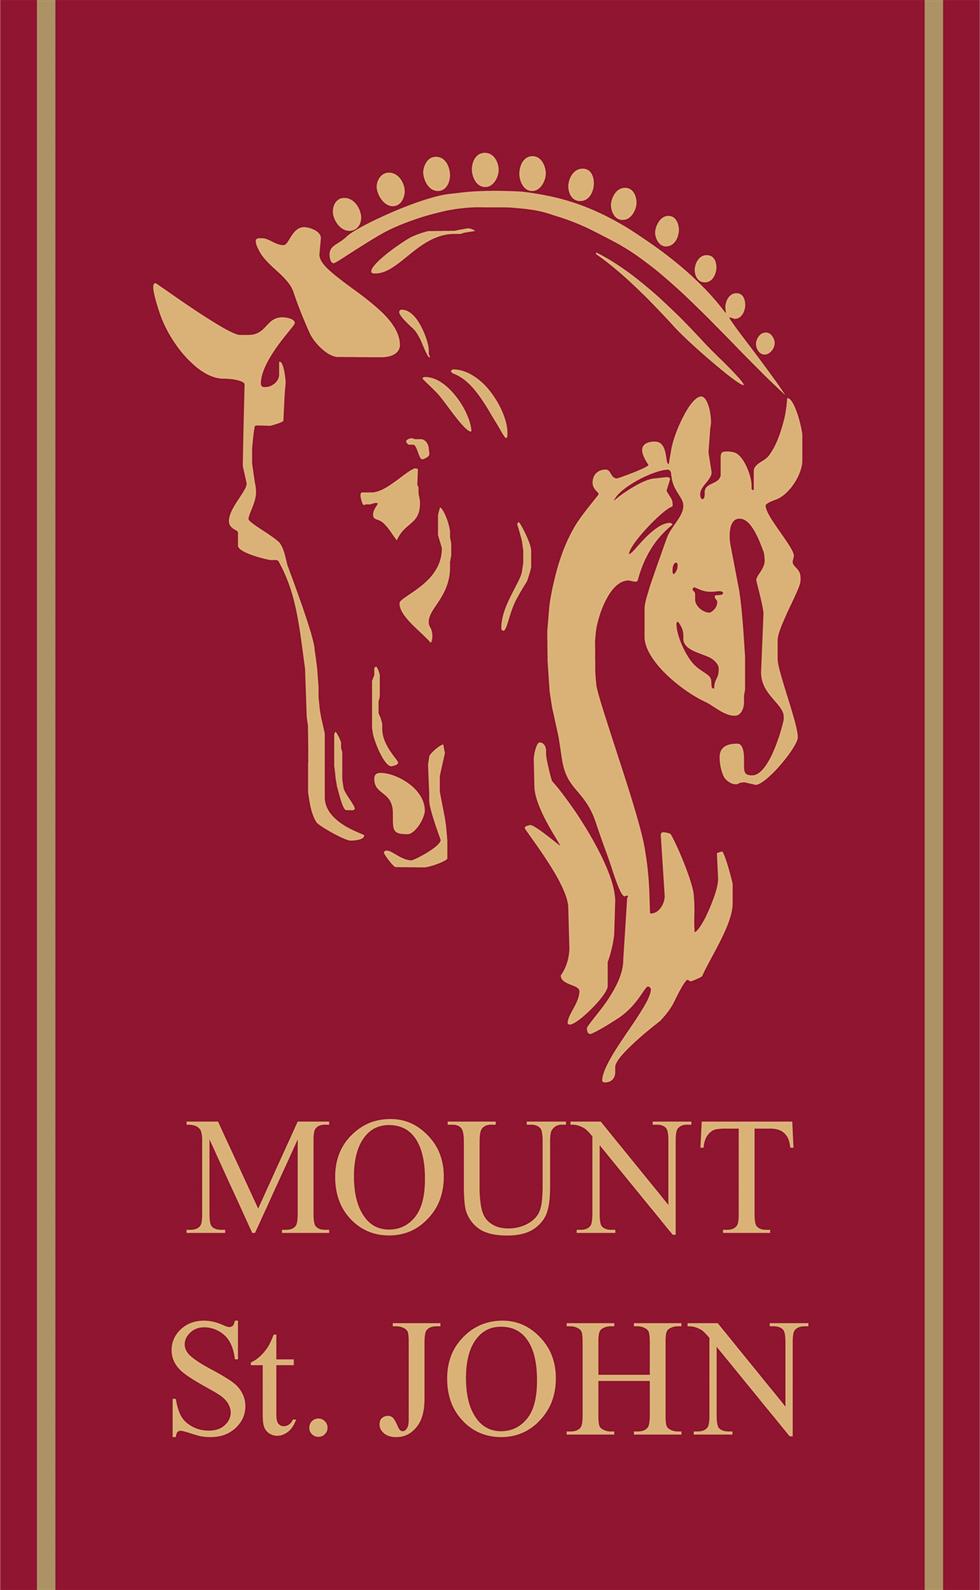 Mount St. John Equestrian